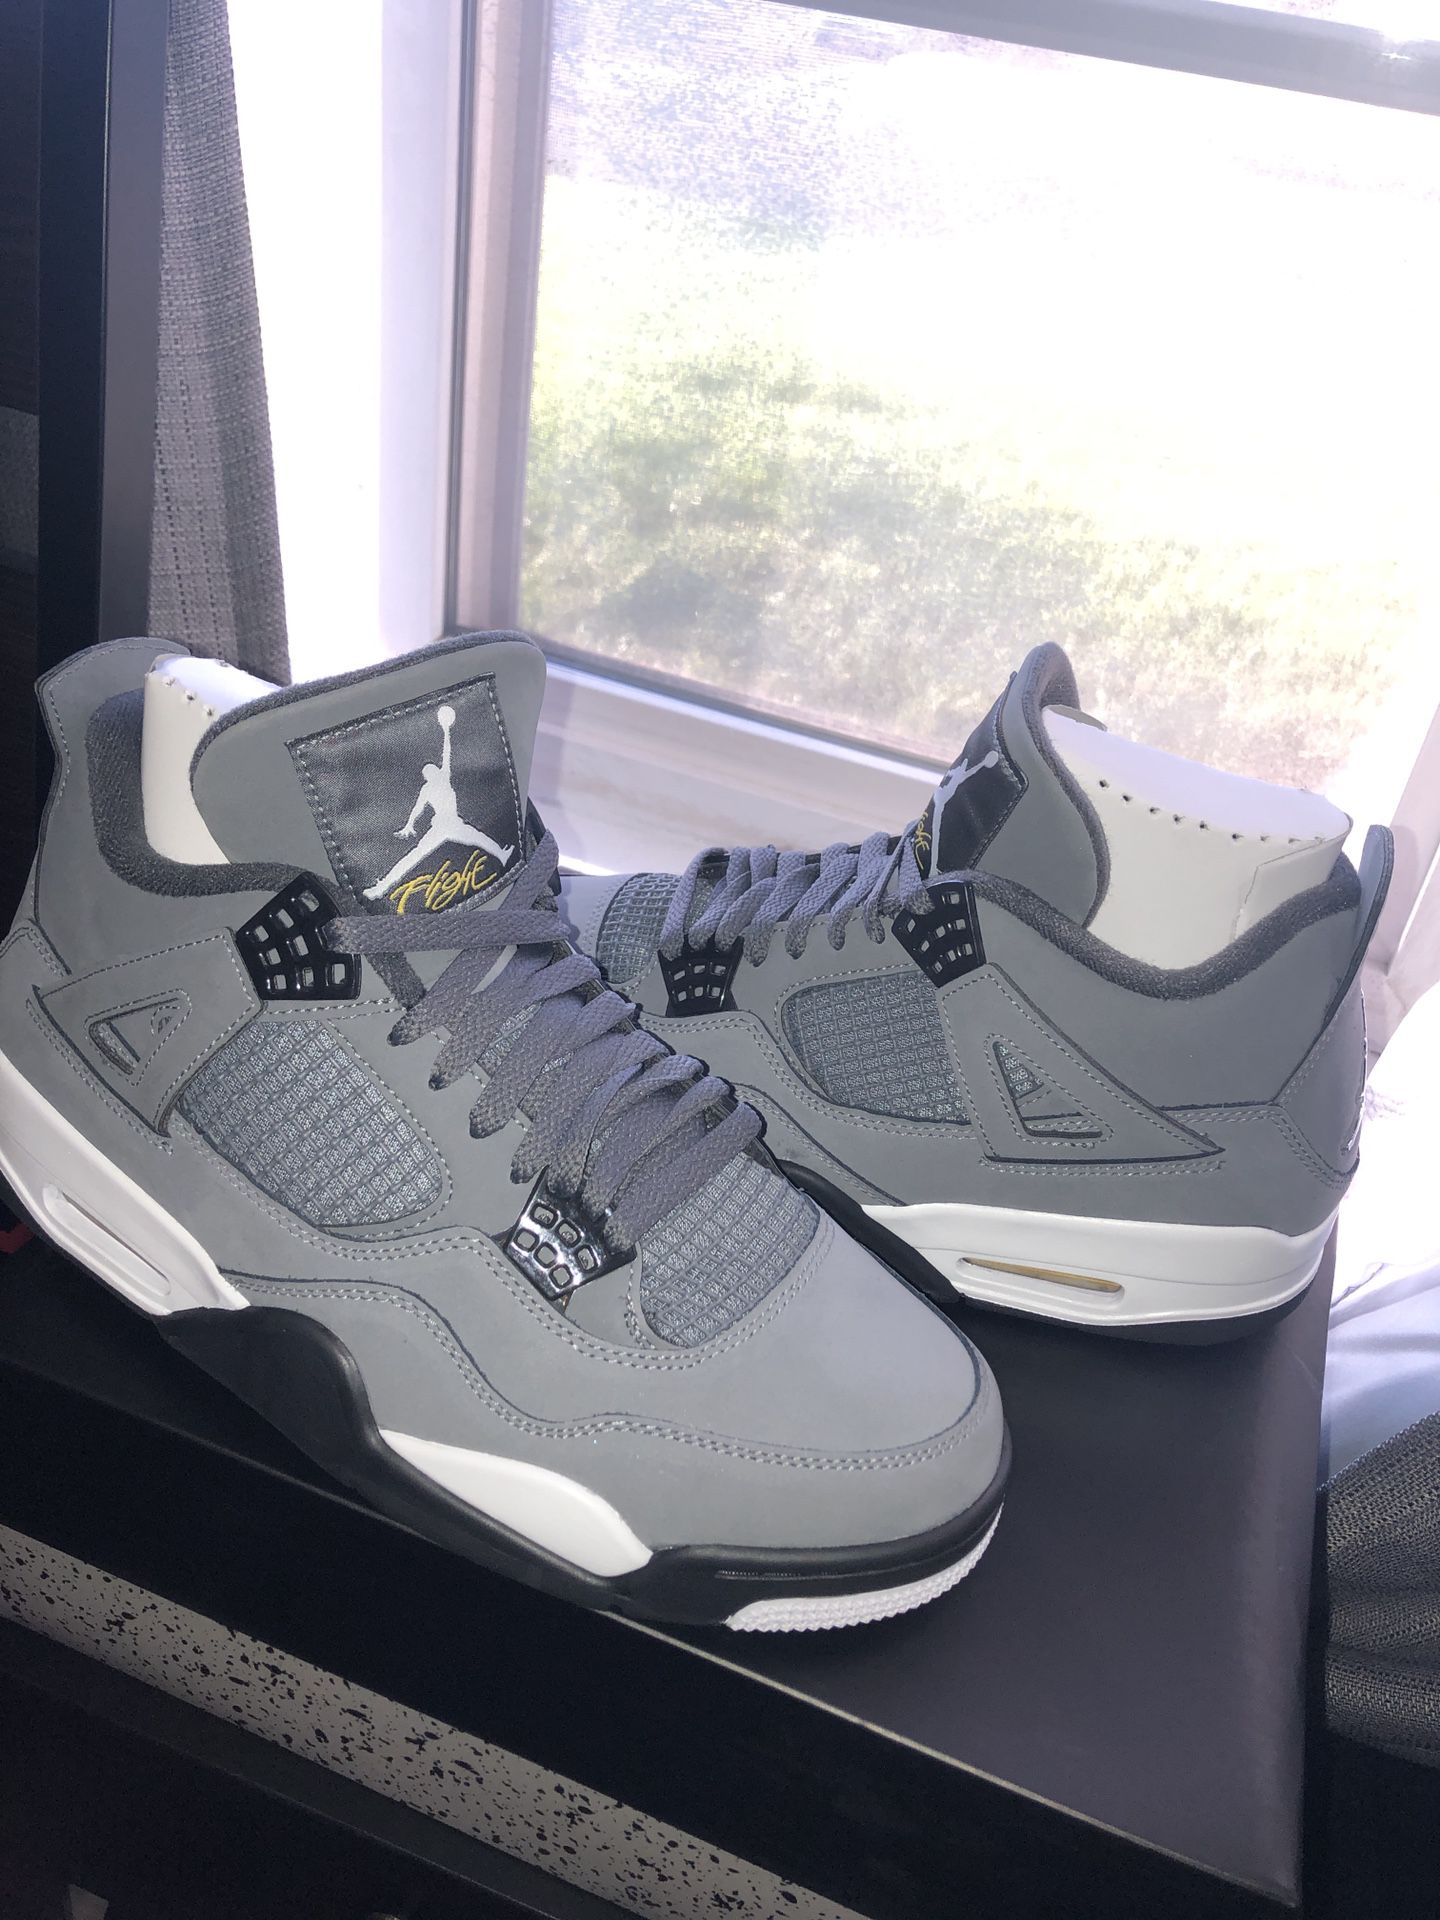 Jordan 4 cool grey size 9.5